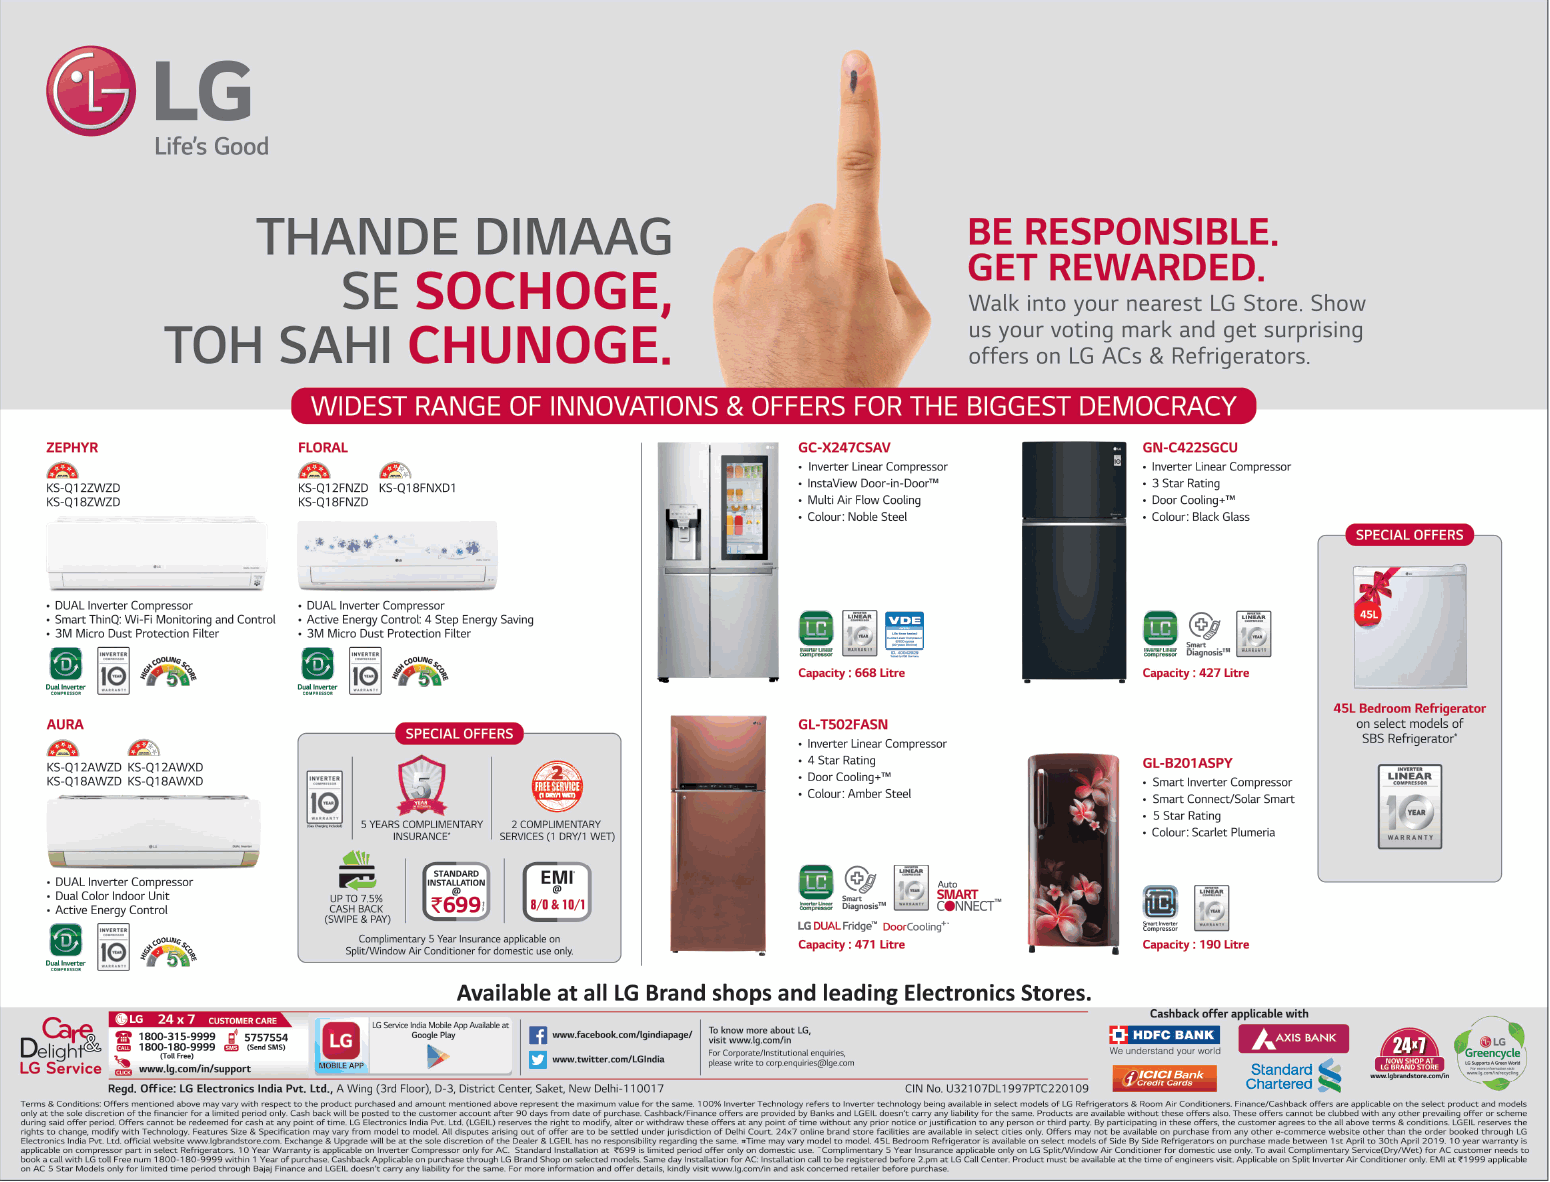 lg-electronics-thande-dimaag-se-sochoge-tosh-sahi-chunoge-ad-delhi-times-05-05-2019.png